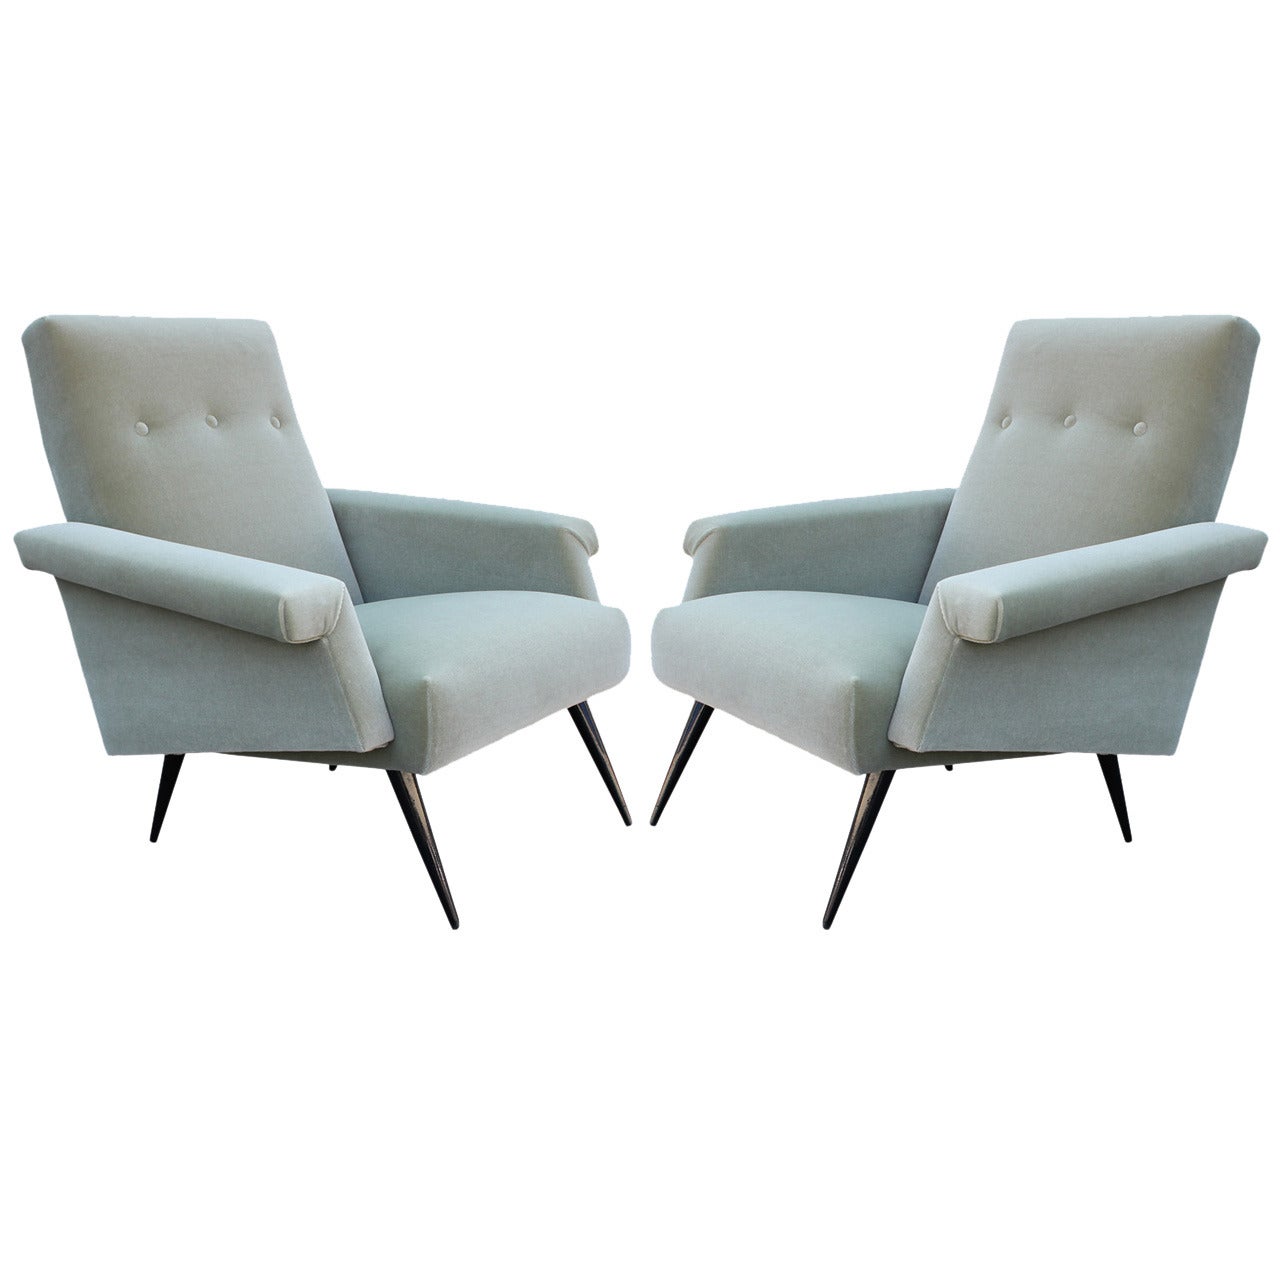 Pair of Sculptural Italian Lounge Chairs in Mohair Velvet